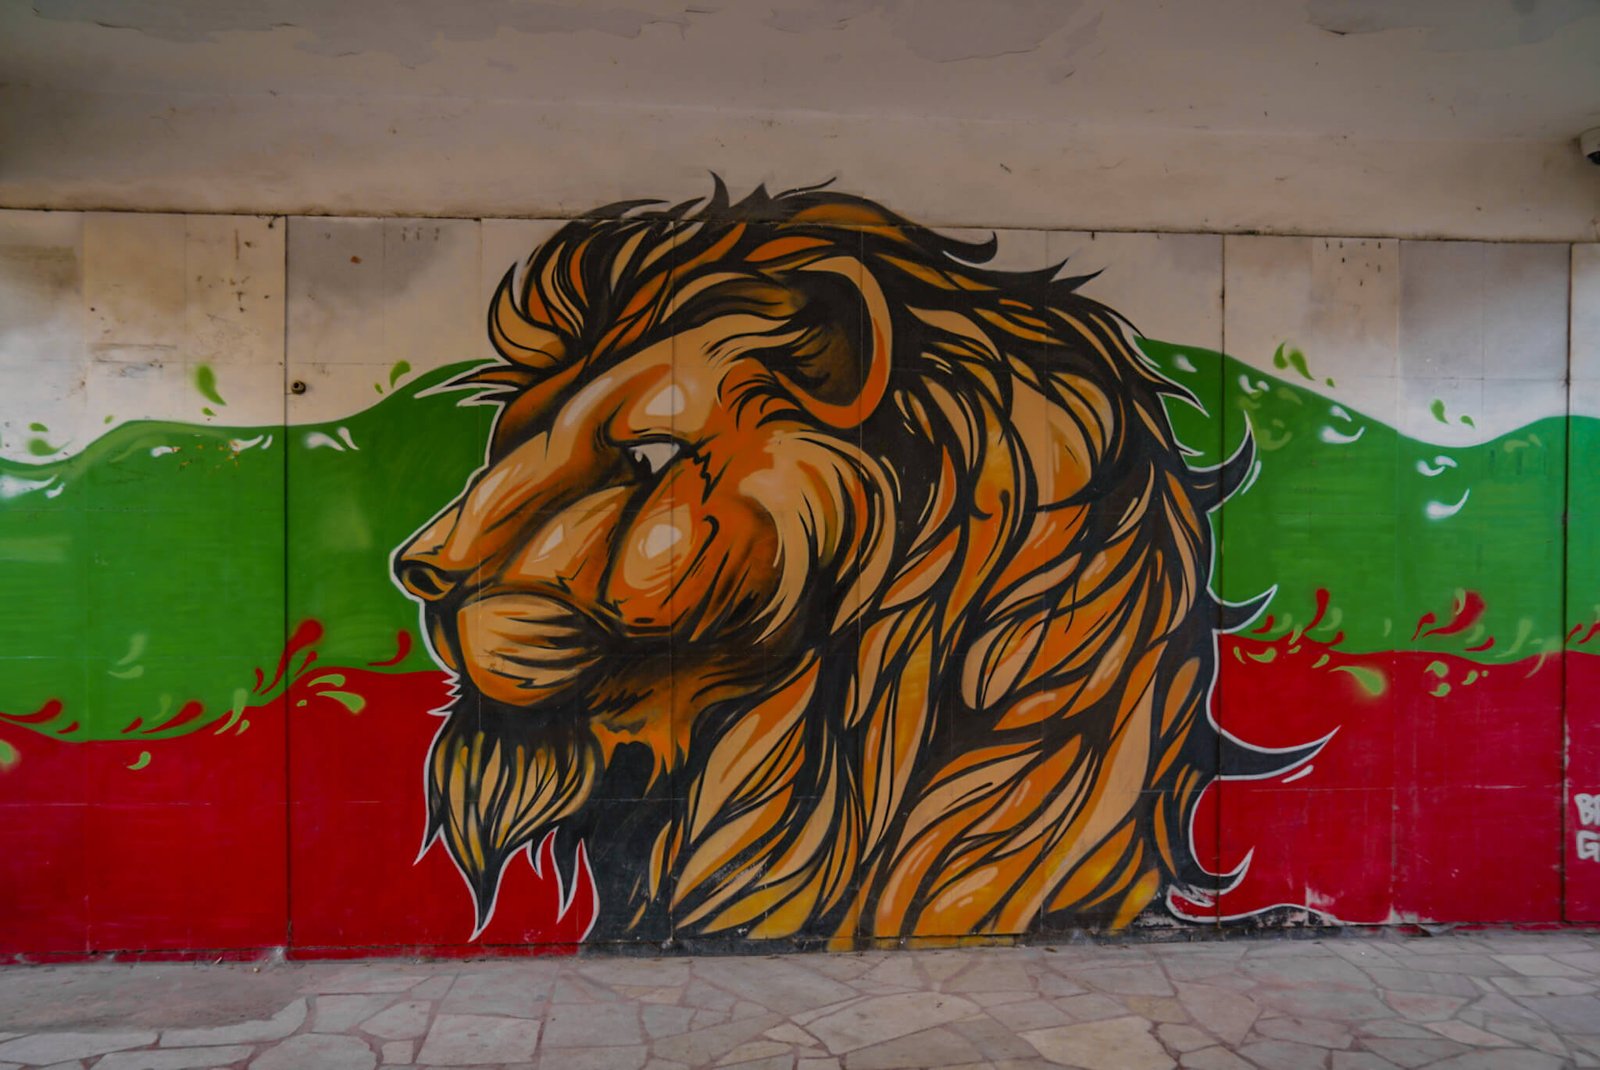 mural in Plovdiv, Bulgaria